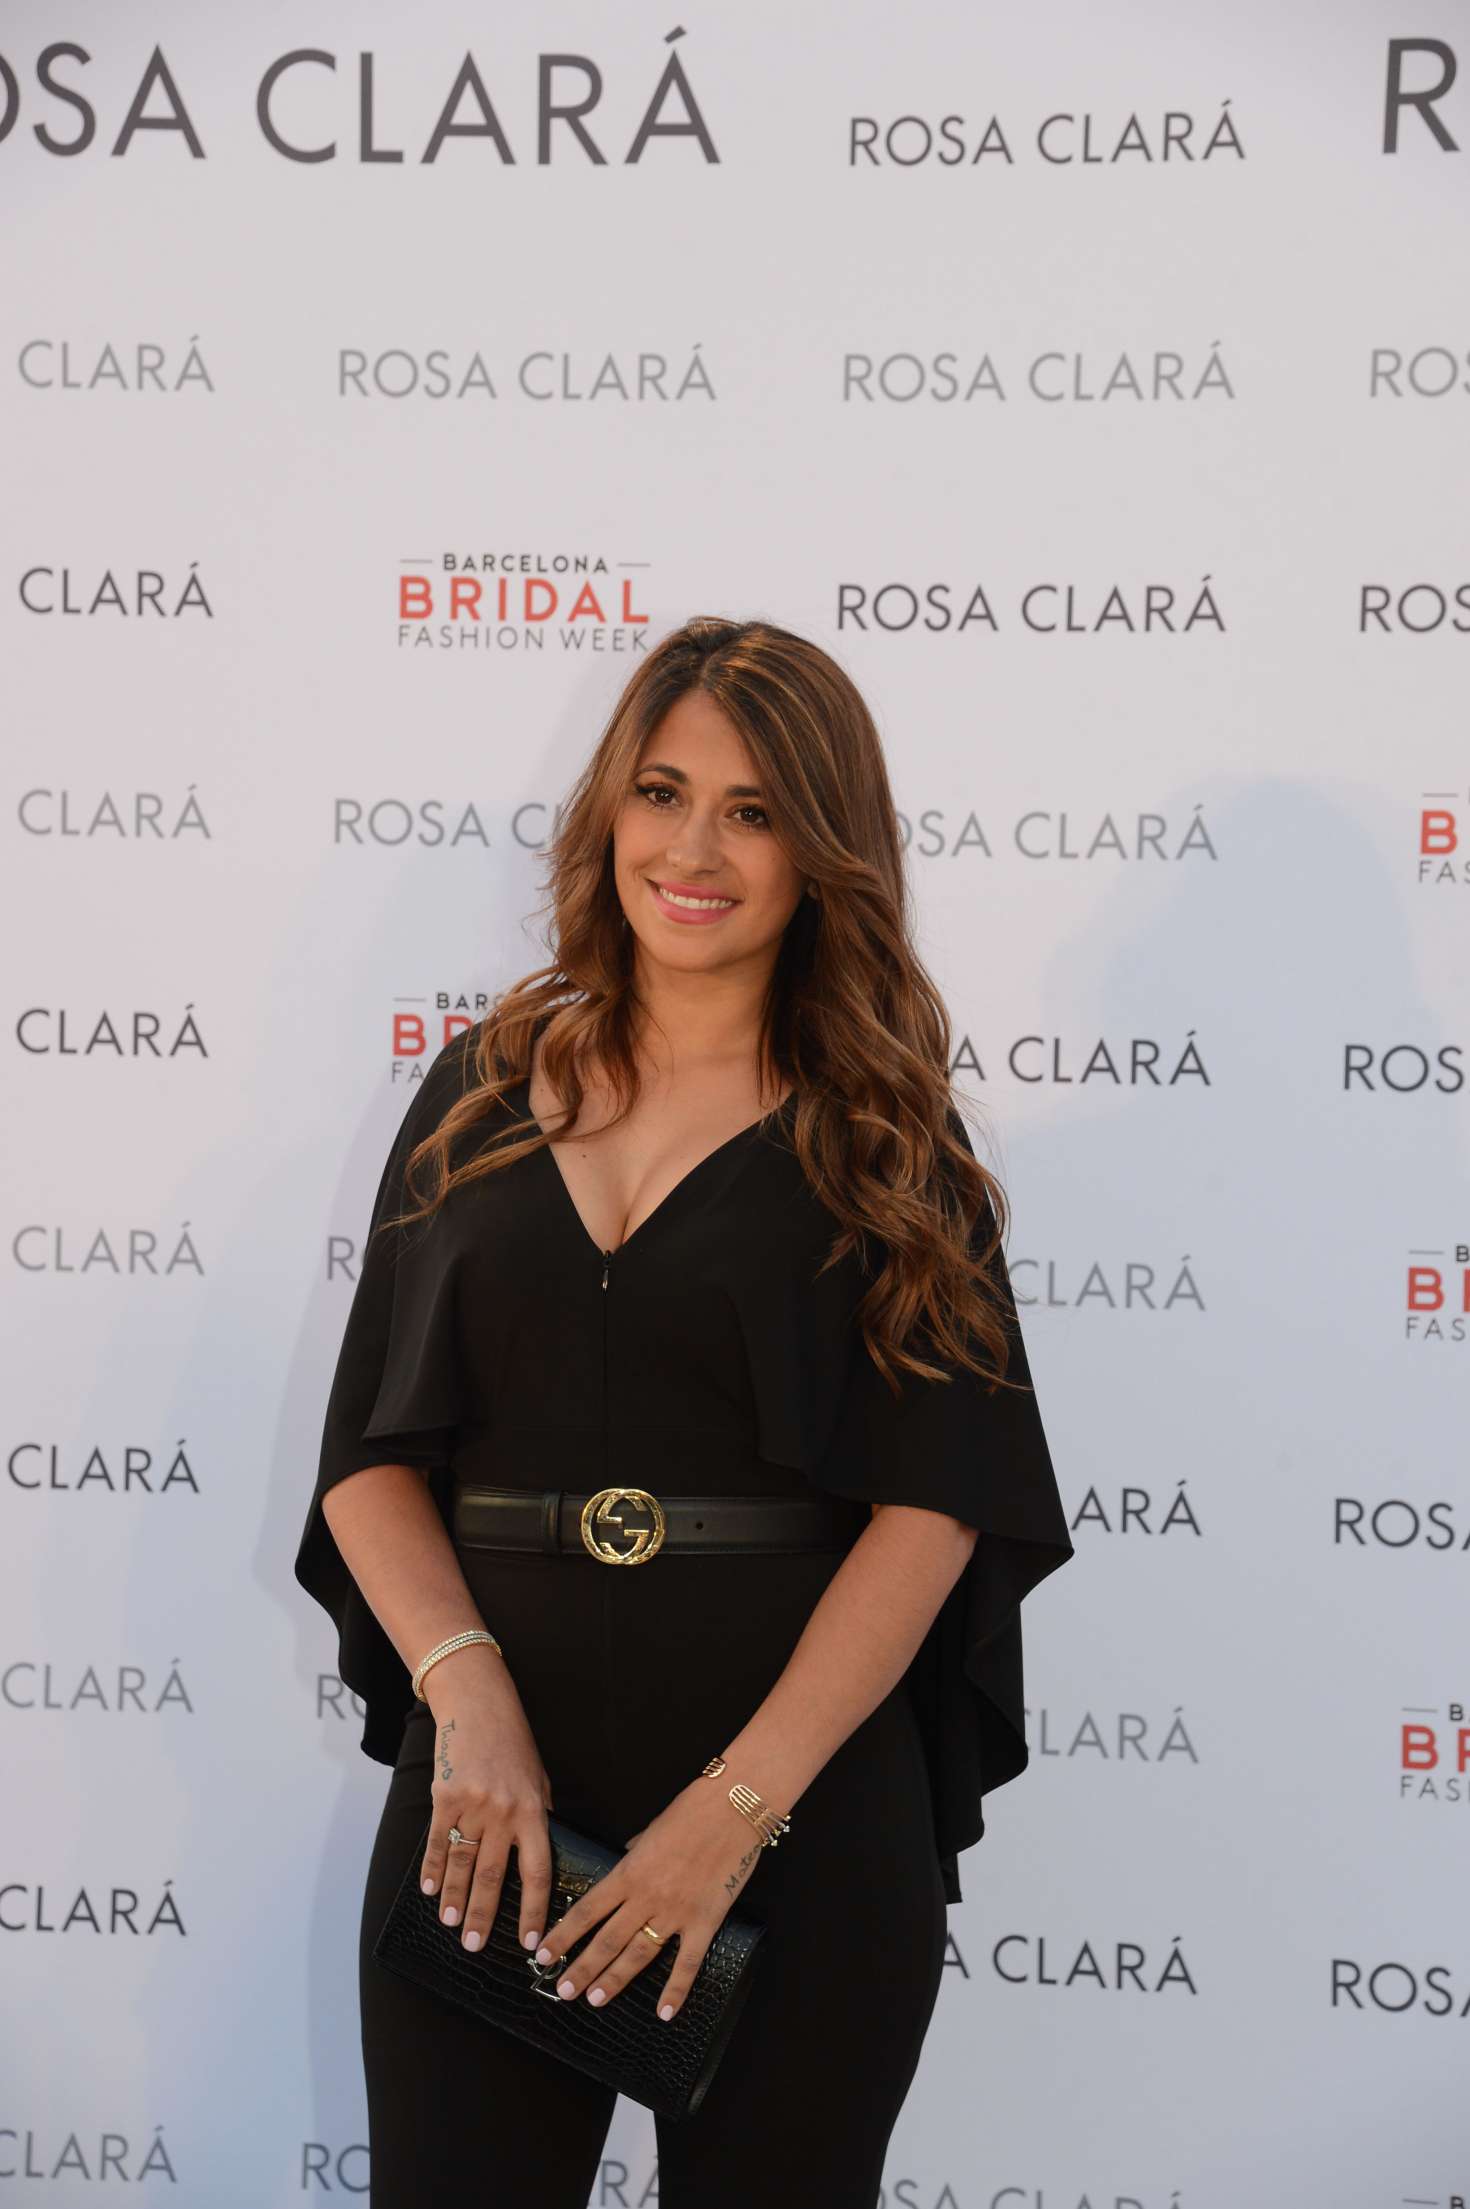 Antonella Roccuzzo - Rosa Clara Presented her wedding collection 2019 in Barcelona